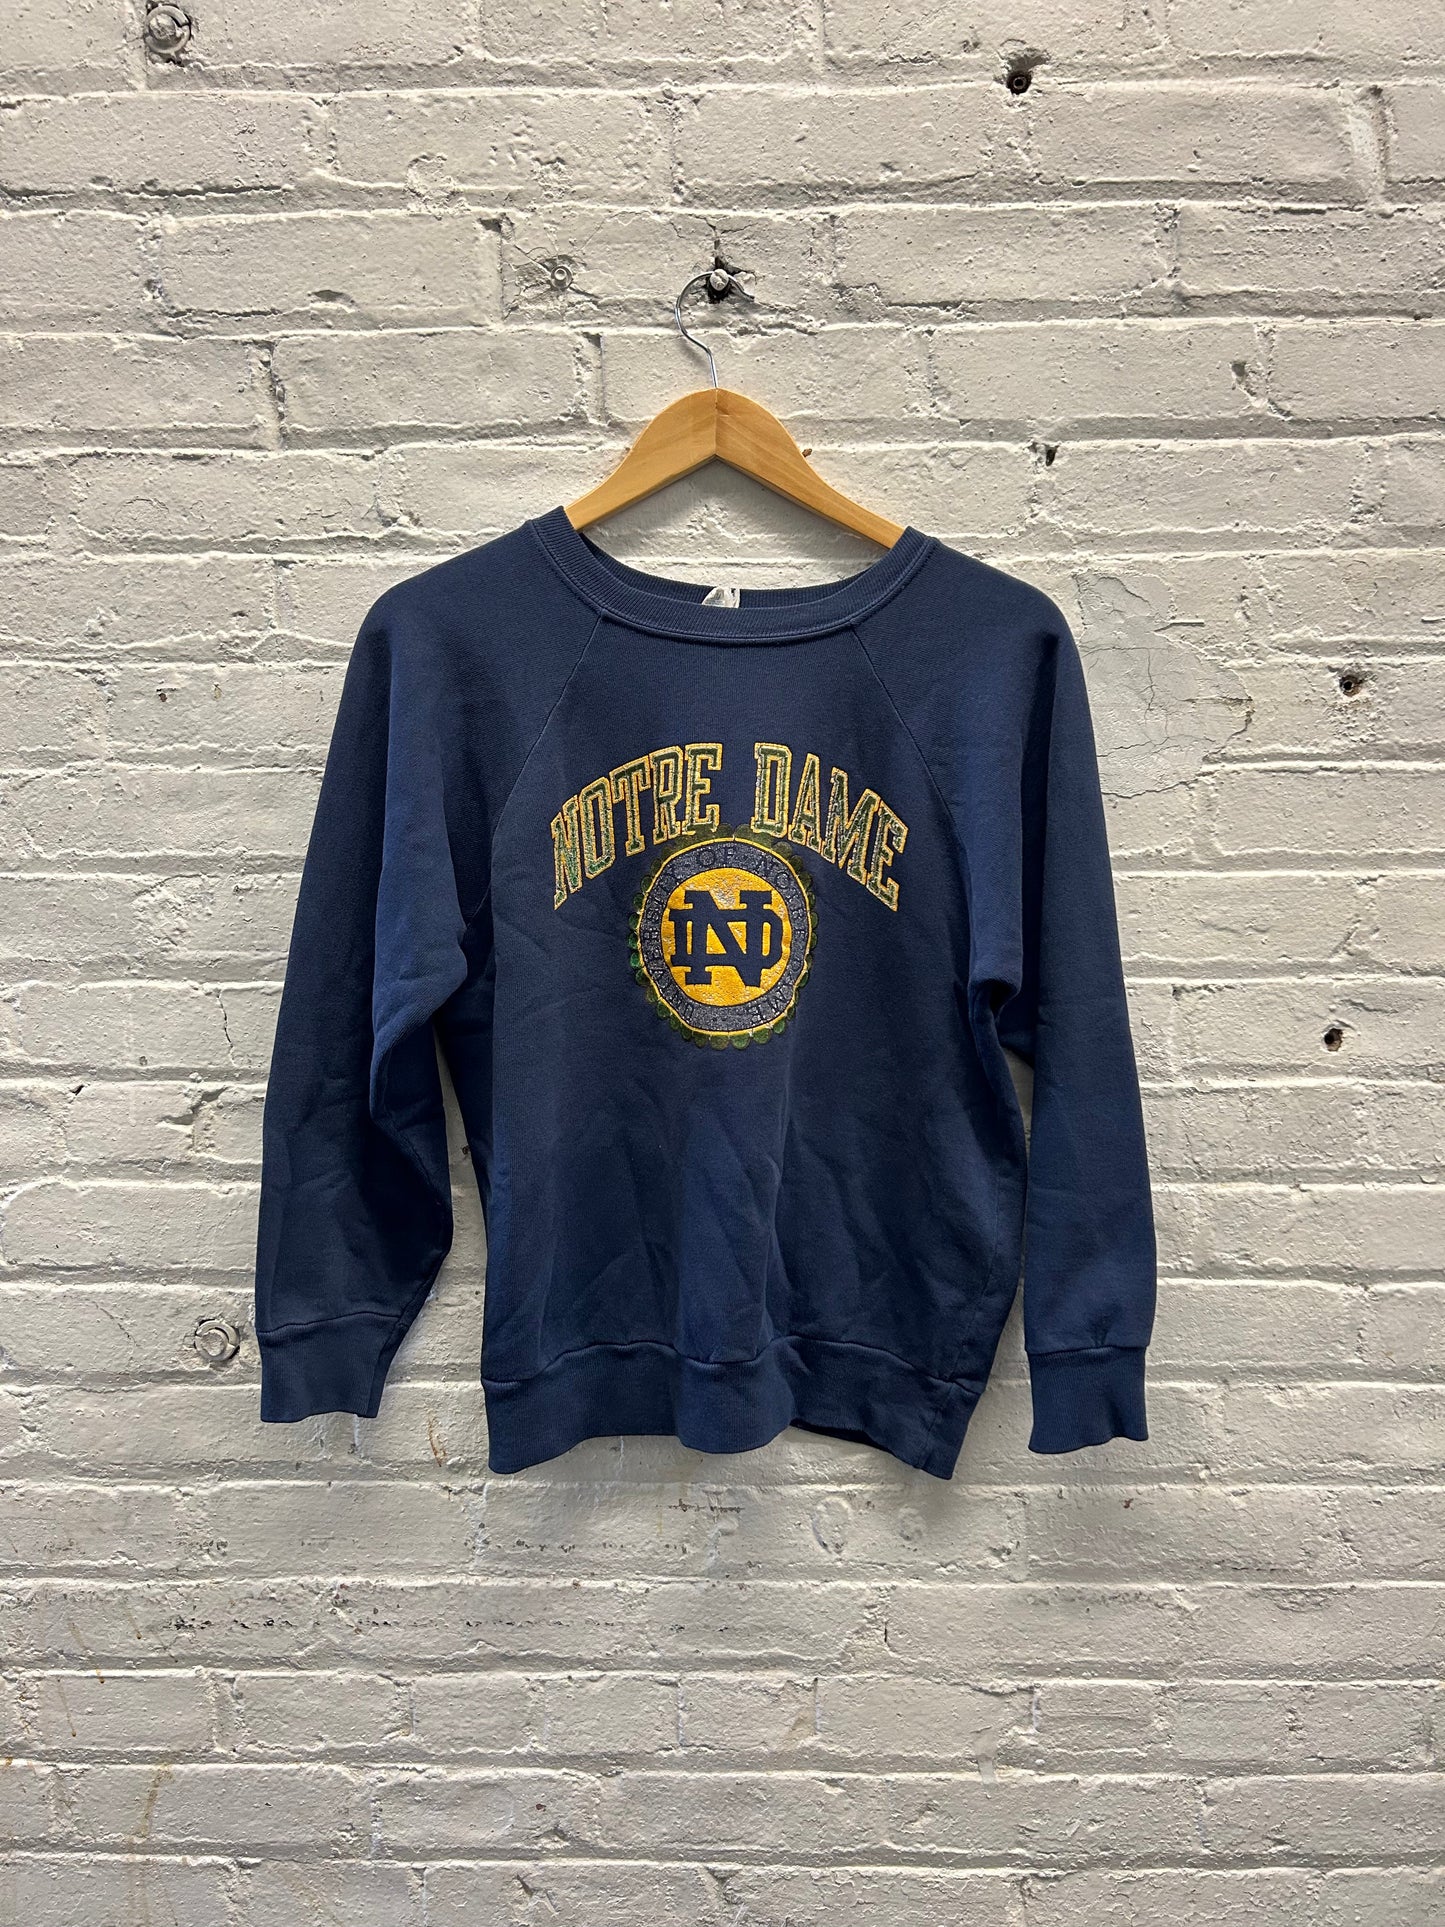 Notre Dame Champion Sweatshirt - Small/Medium